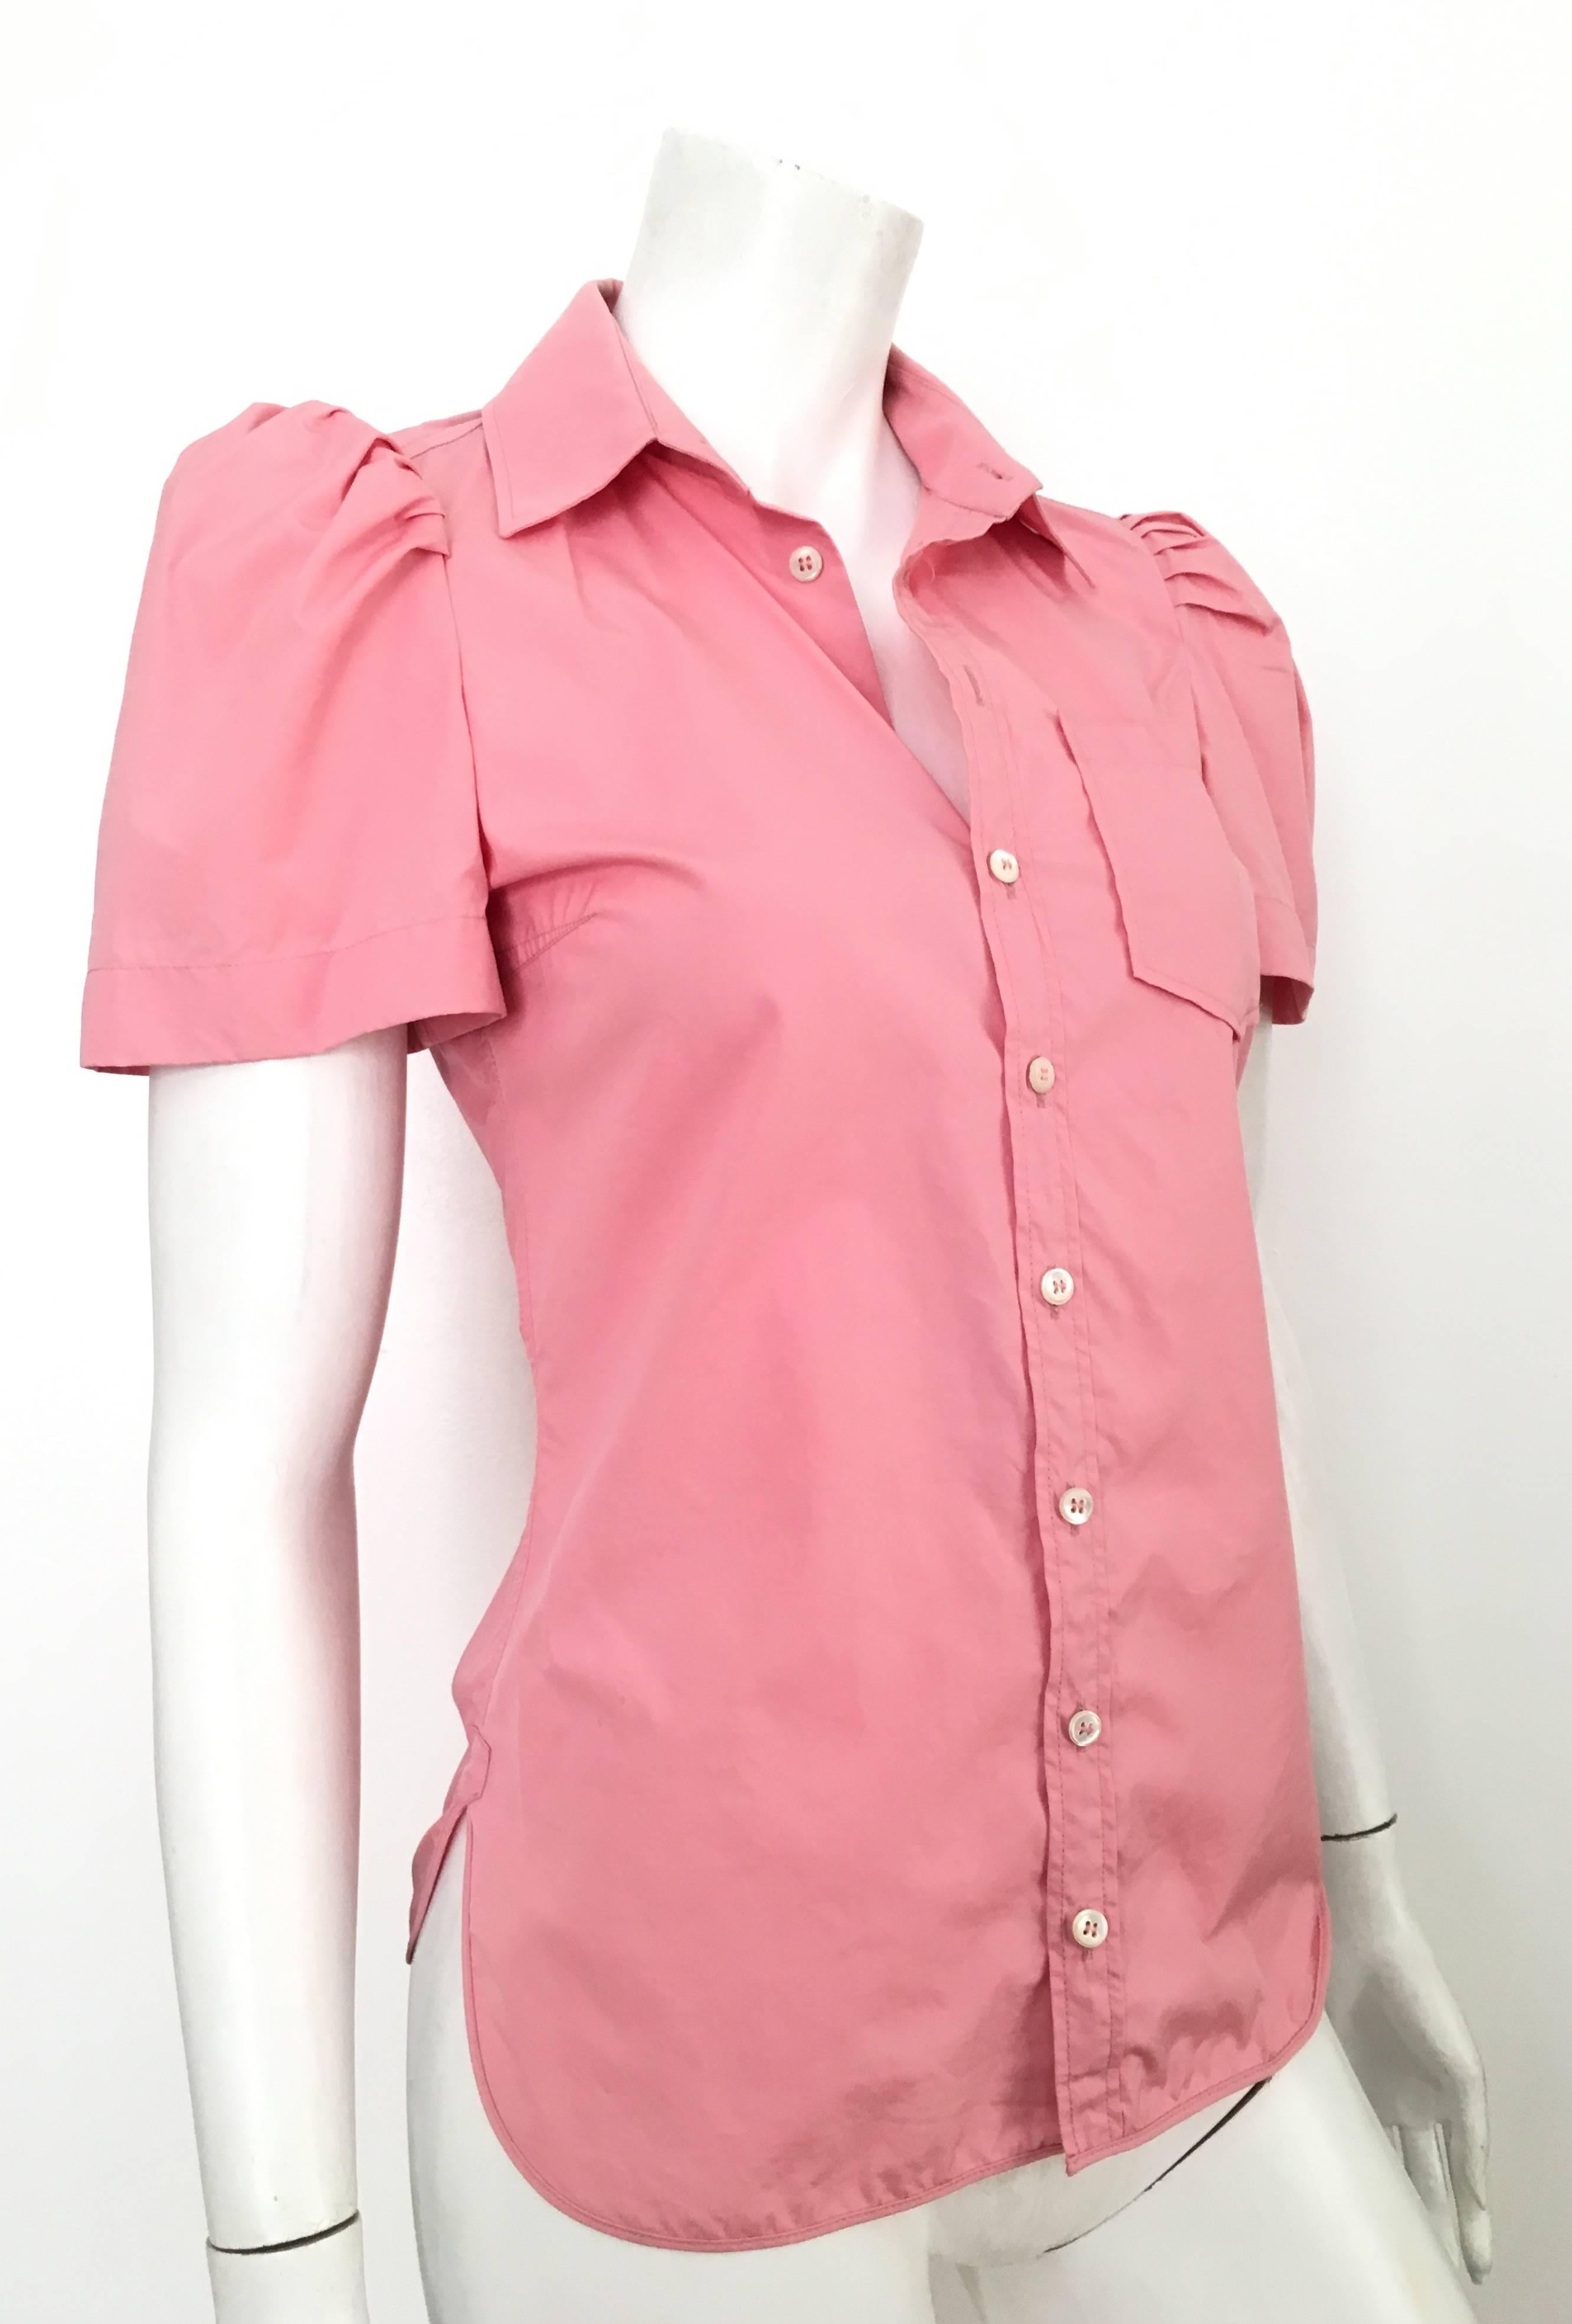 Balenciaga Pink Cotton Short Sleeve Blouse Size 4.  For Sale 3